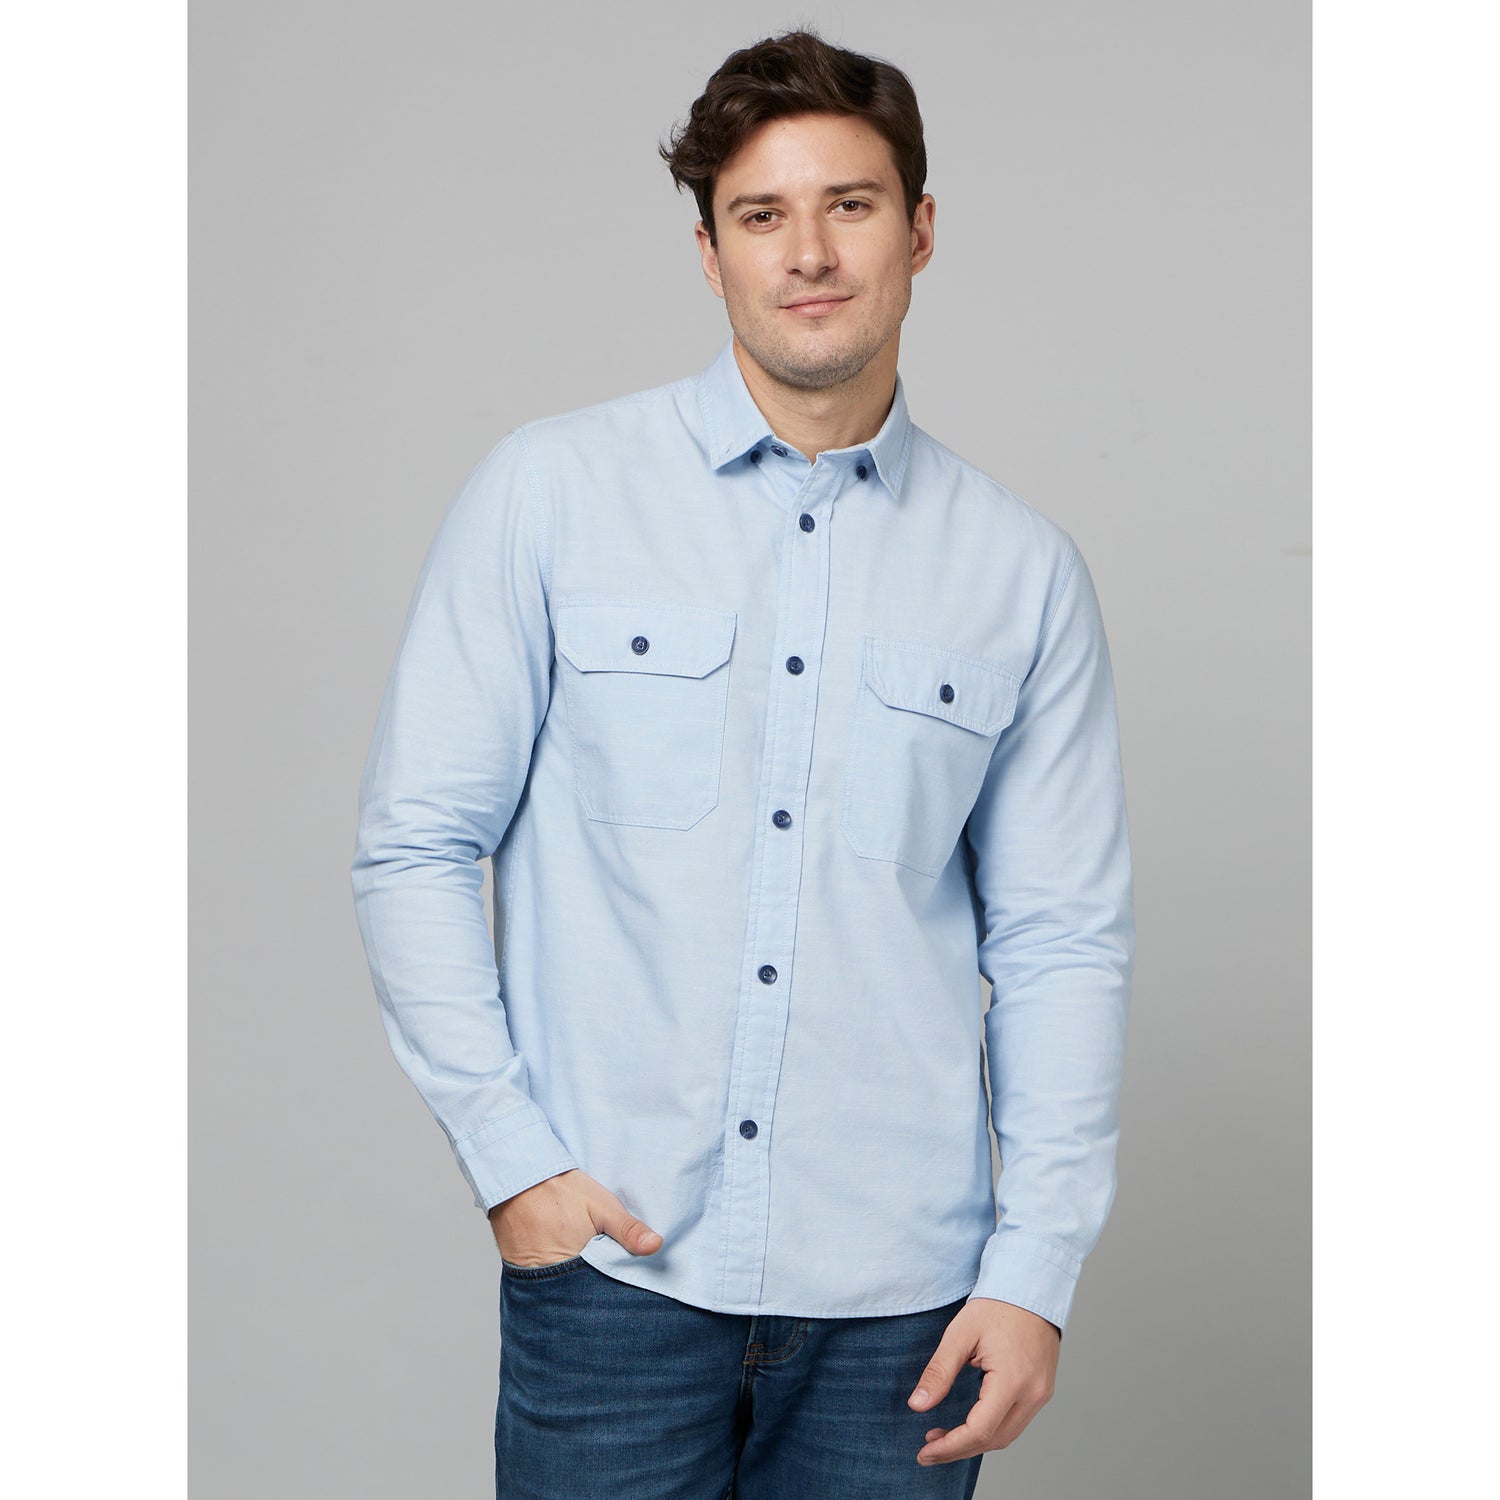 Light Blue Classic Button-Down Collar Cotton Casual Shirt (FANA)